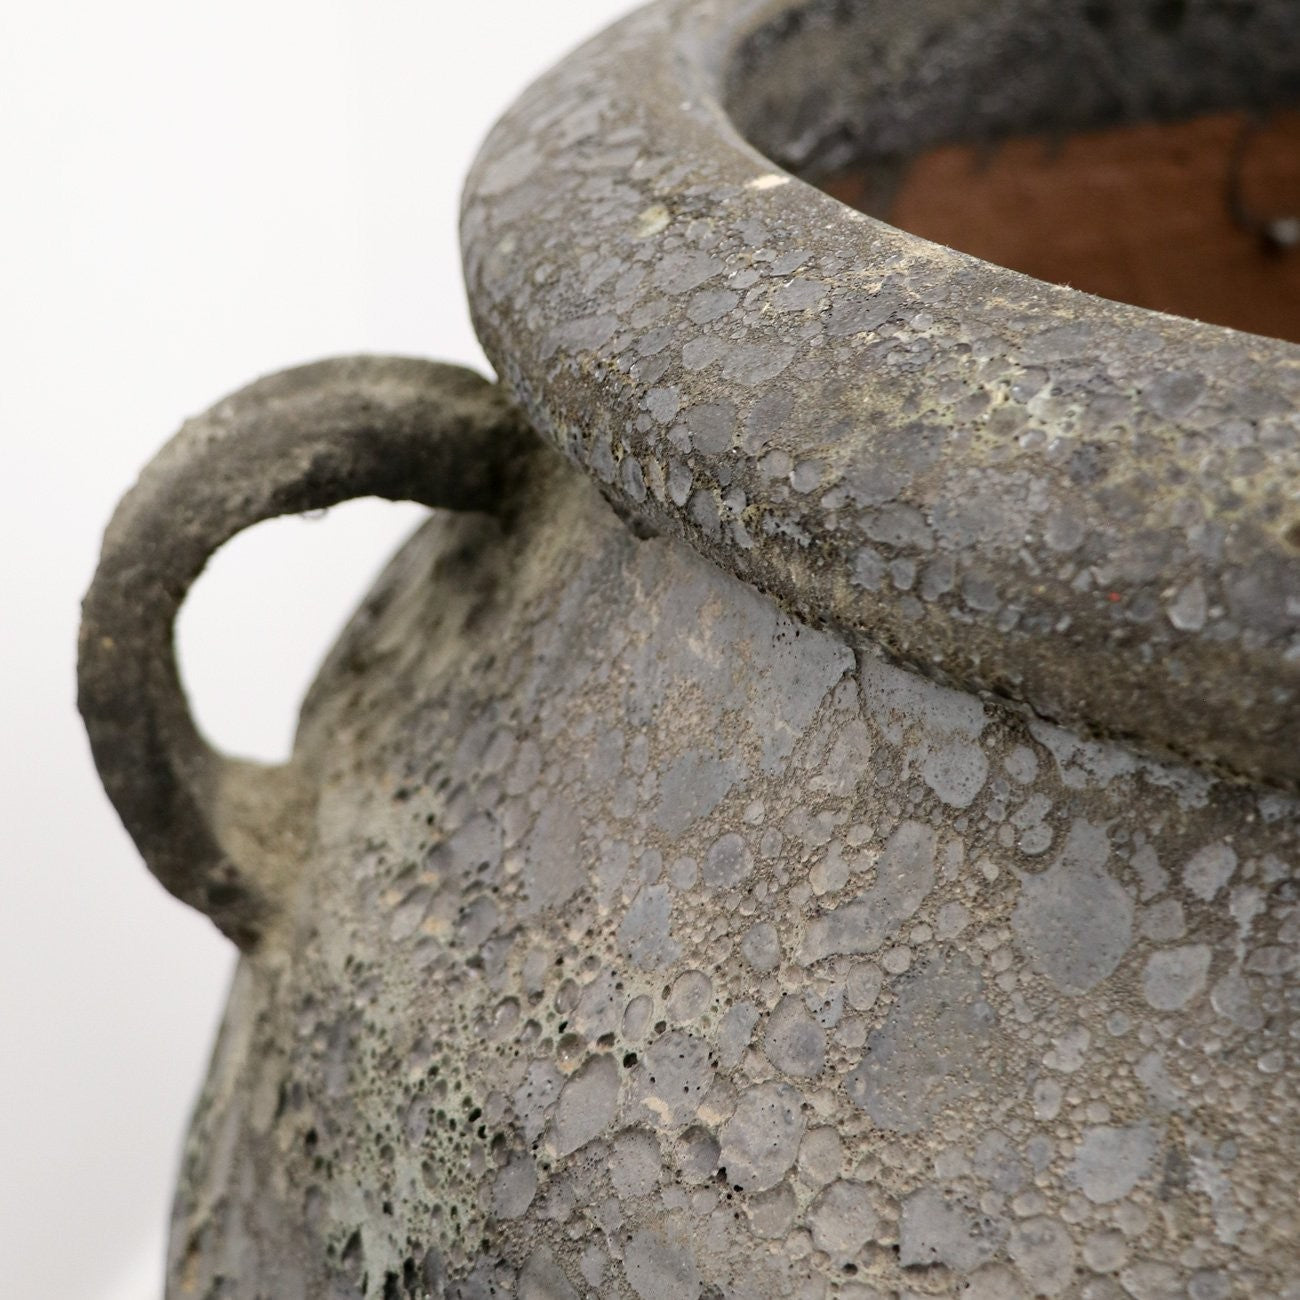 Lava Vase Outdoor Pot - Extra Large - Black